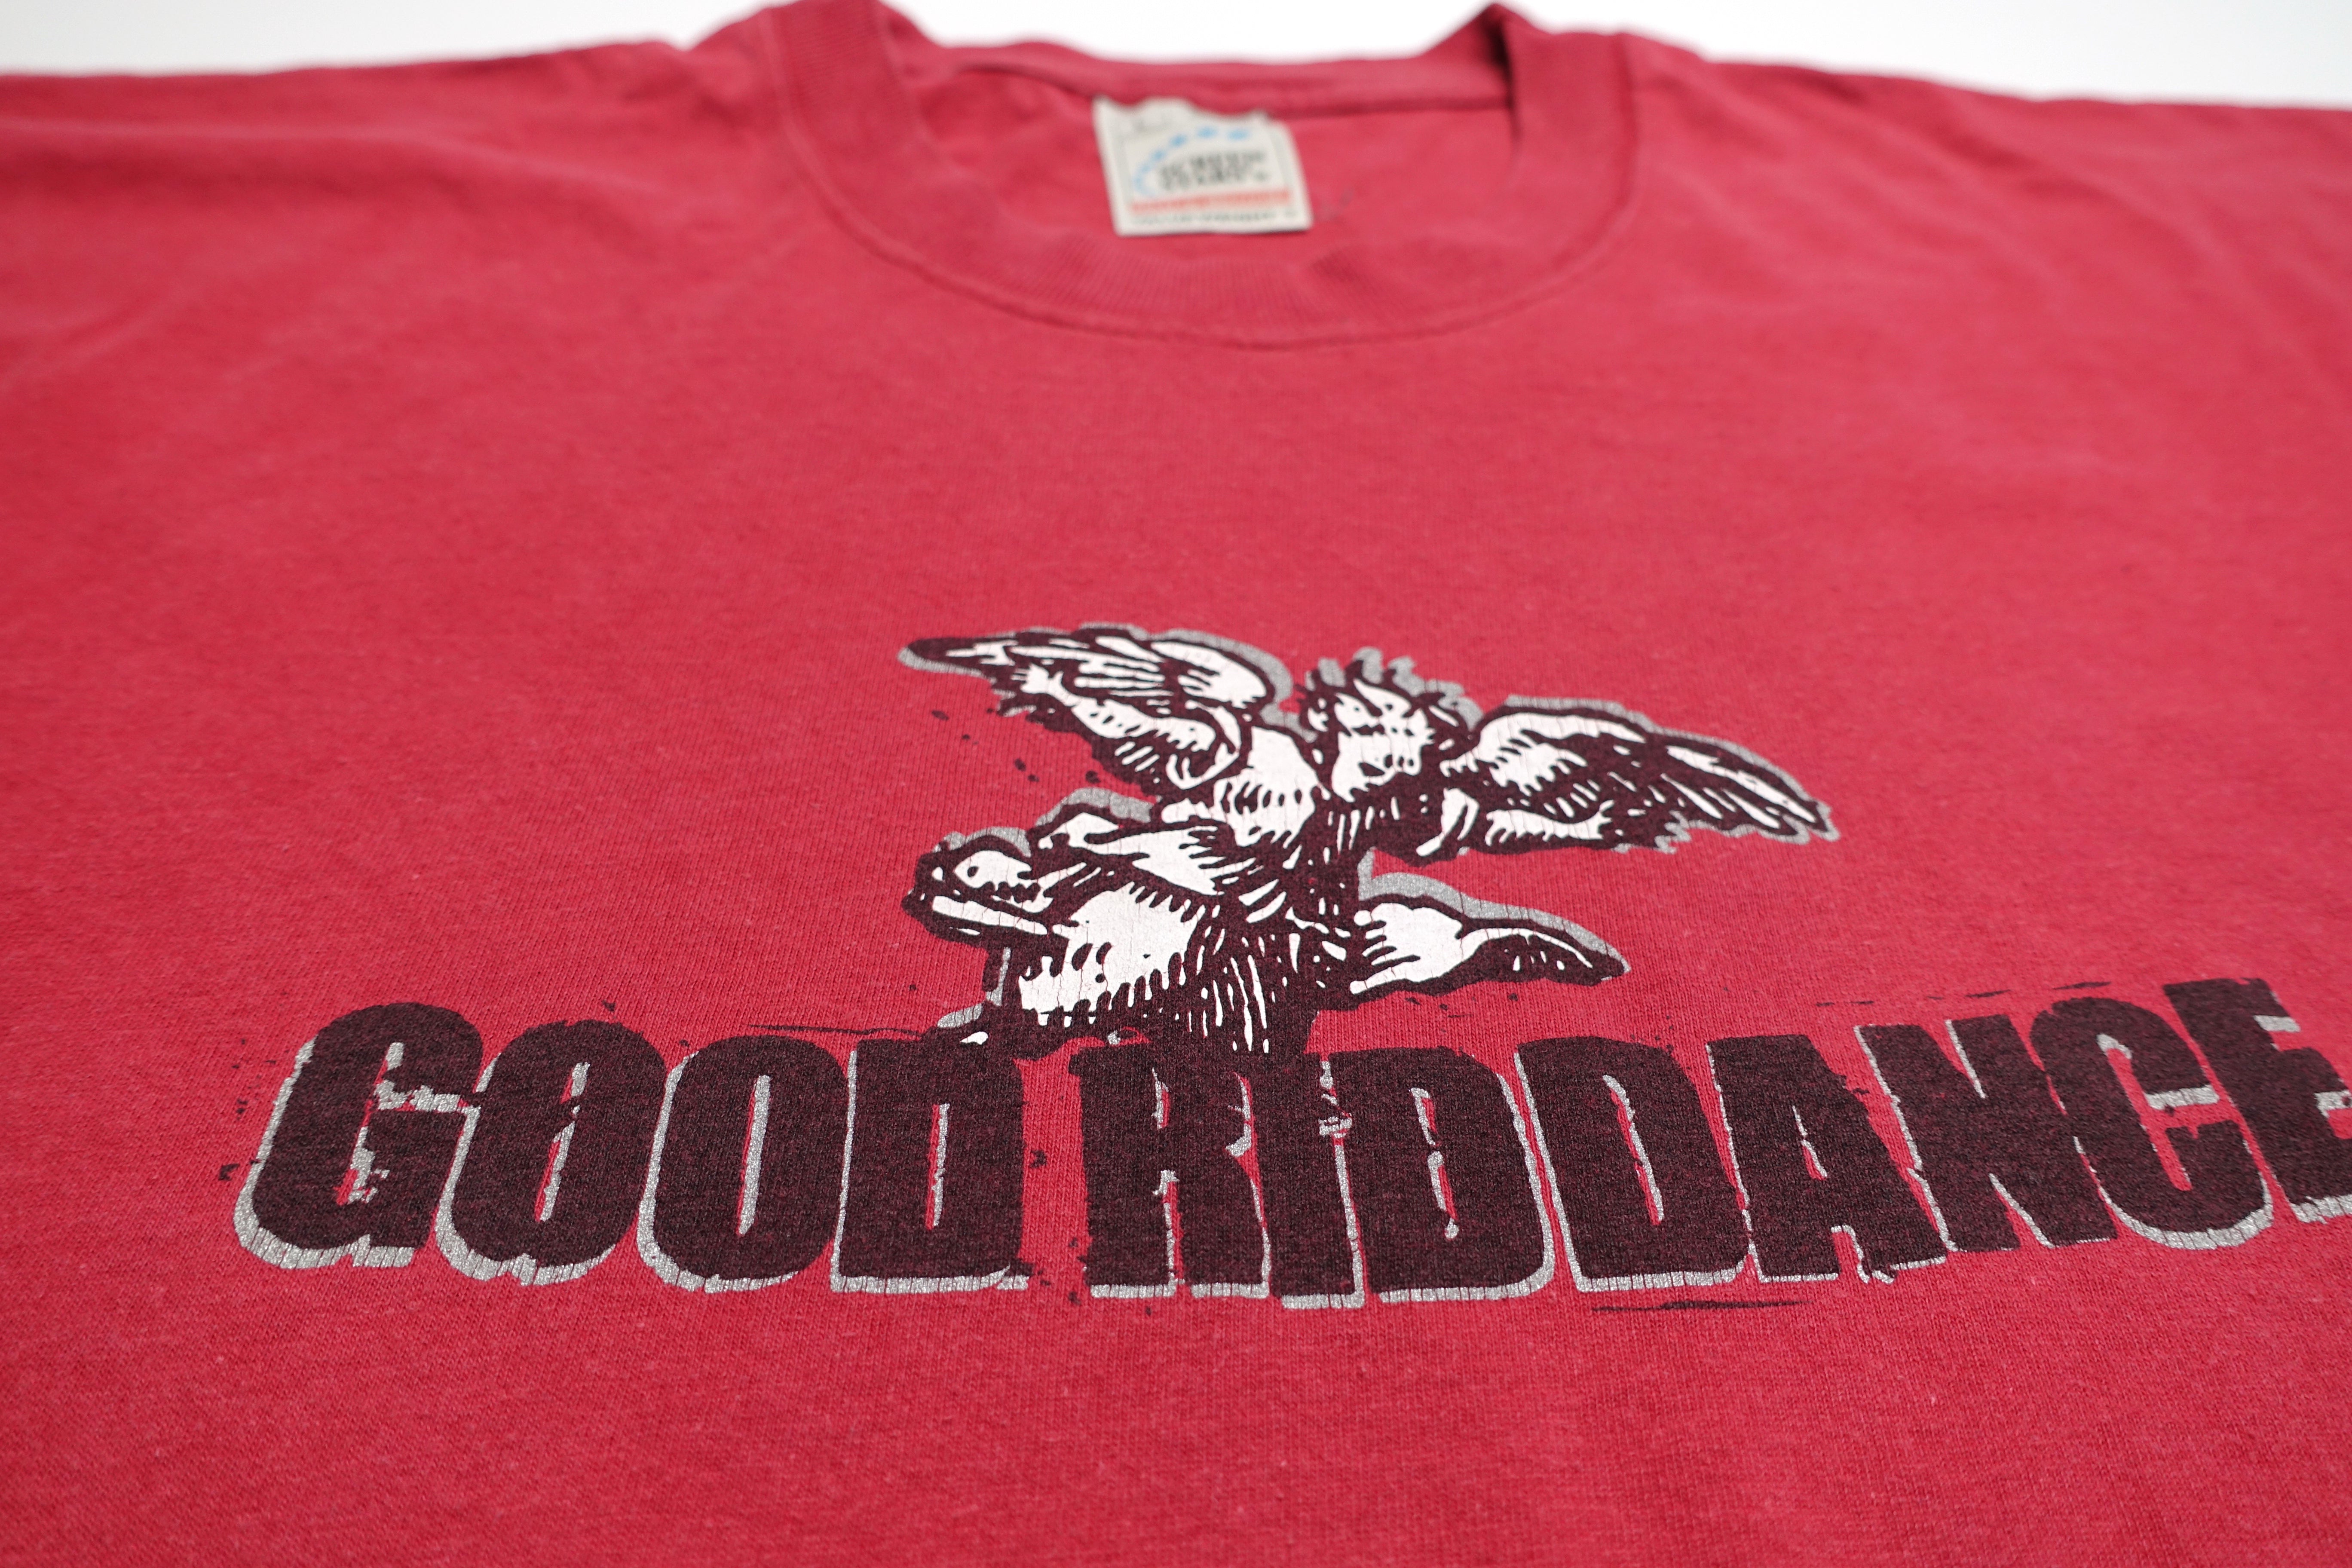 Good Riddance - Symptoms Of A Leveling Spirit 2001 Tour Shirt Size Large